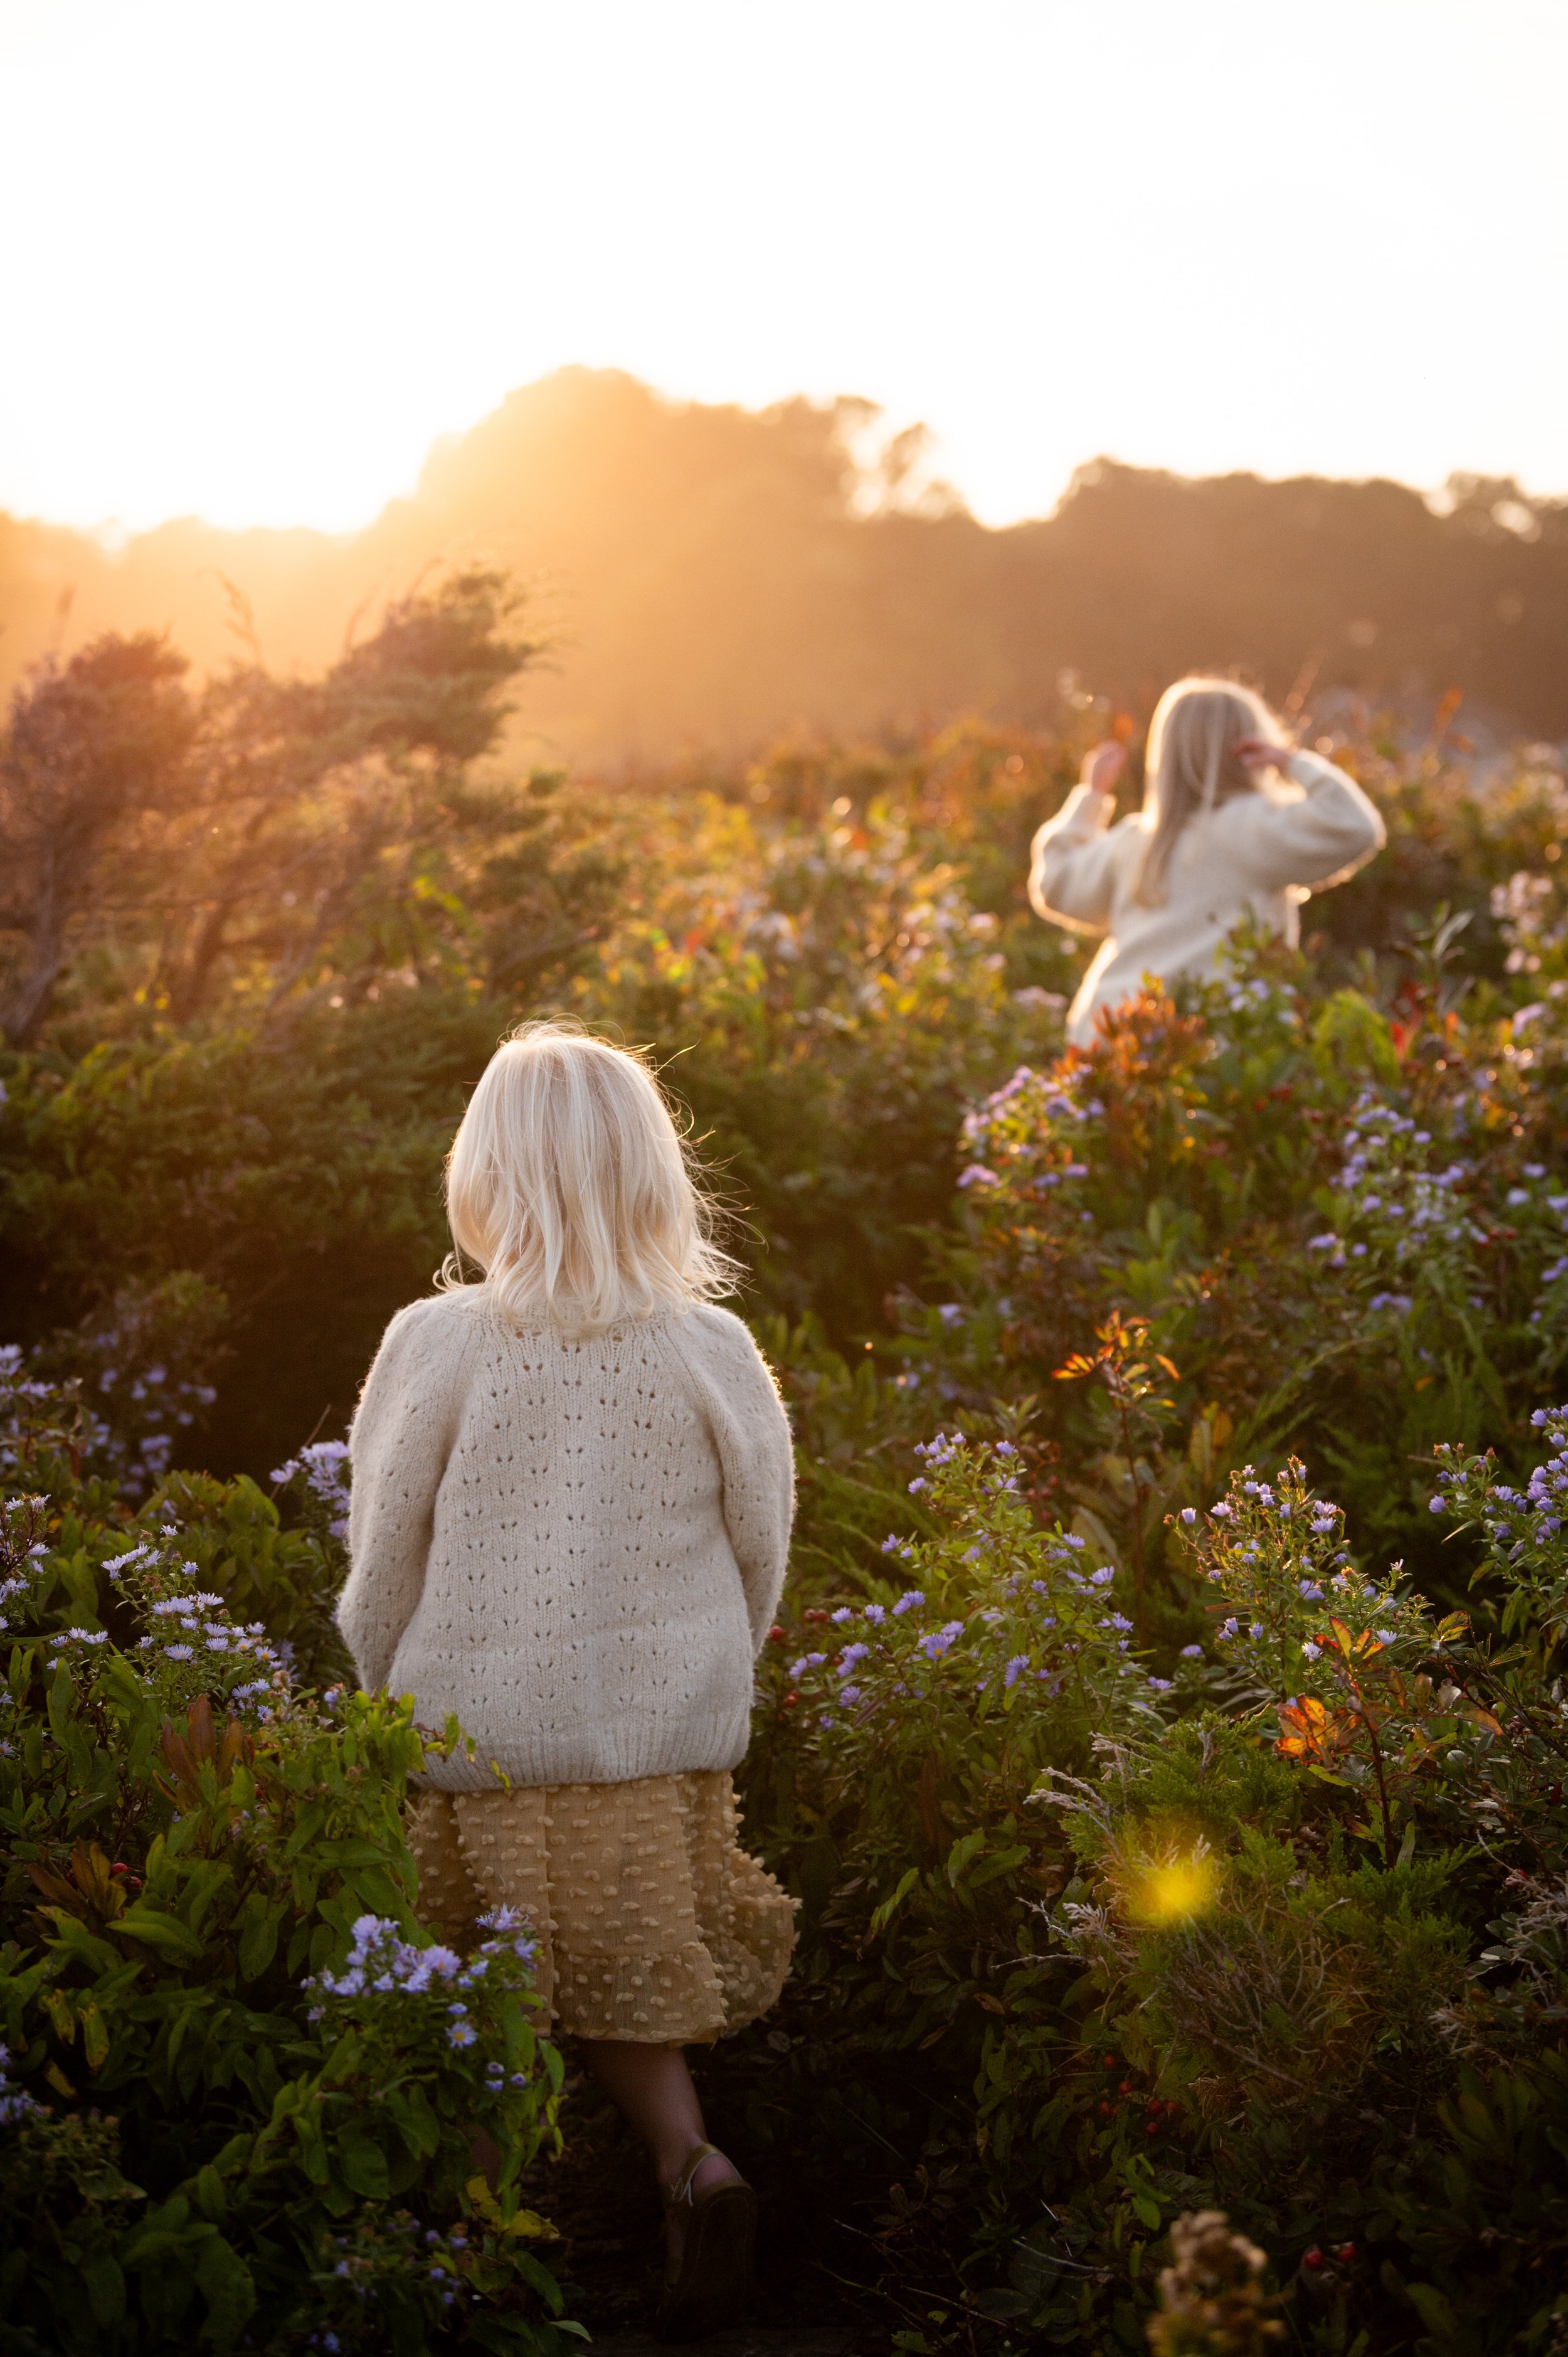 lindsay murphy photography | portland maine family photographer | cape elizabeth little girls playing sunset.jpg